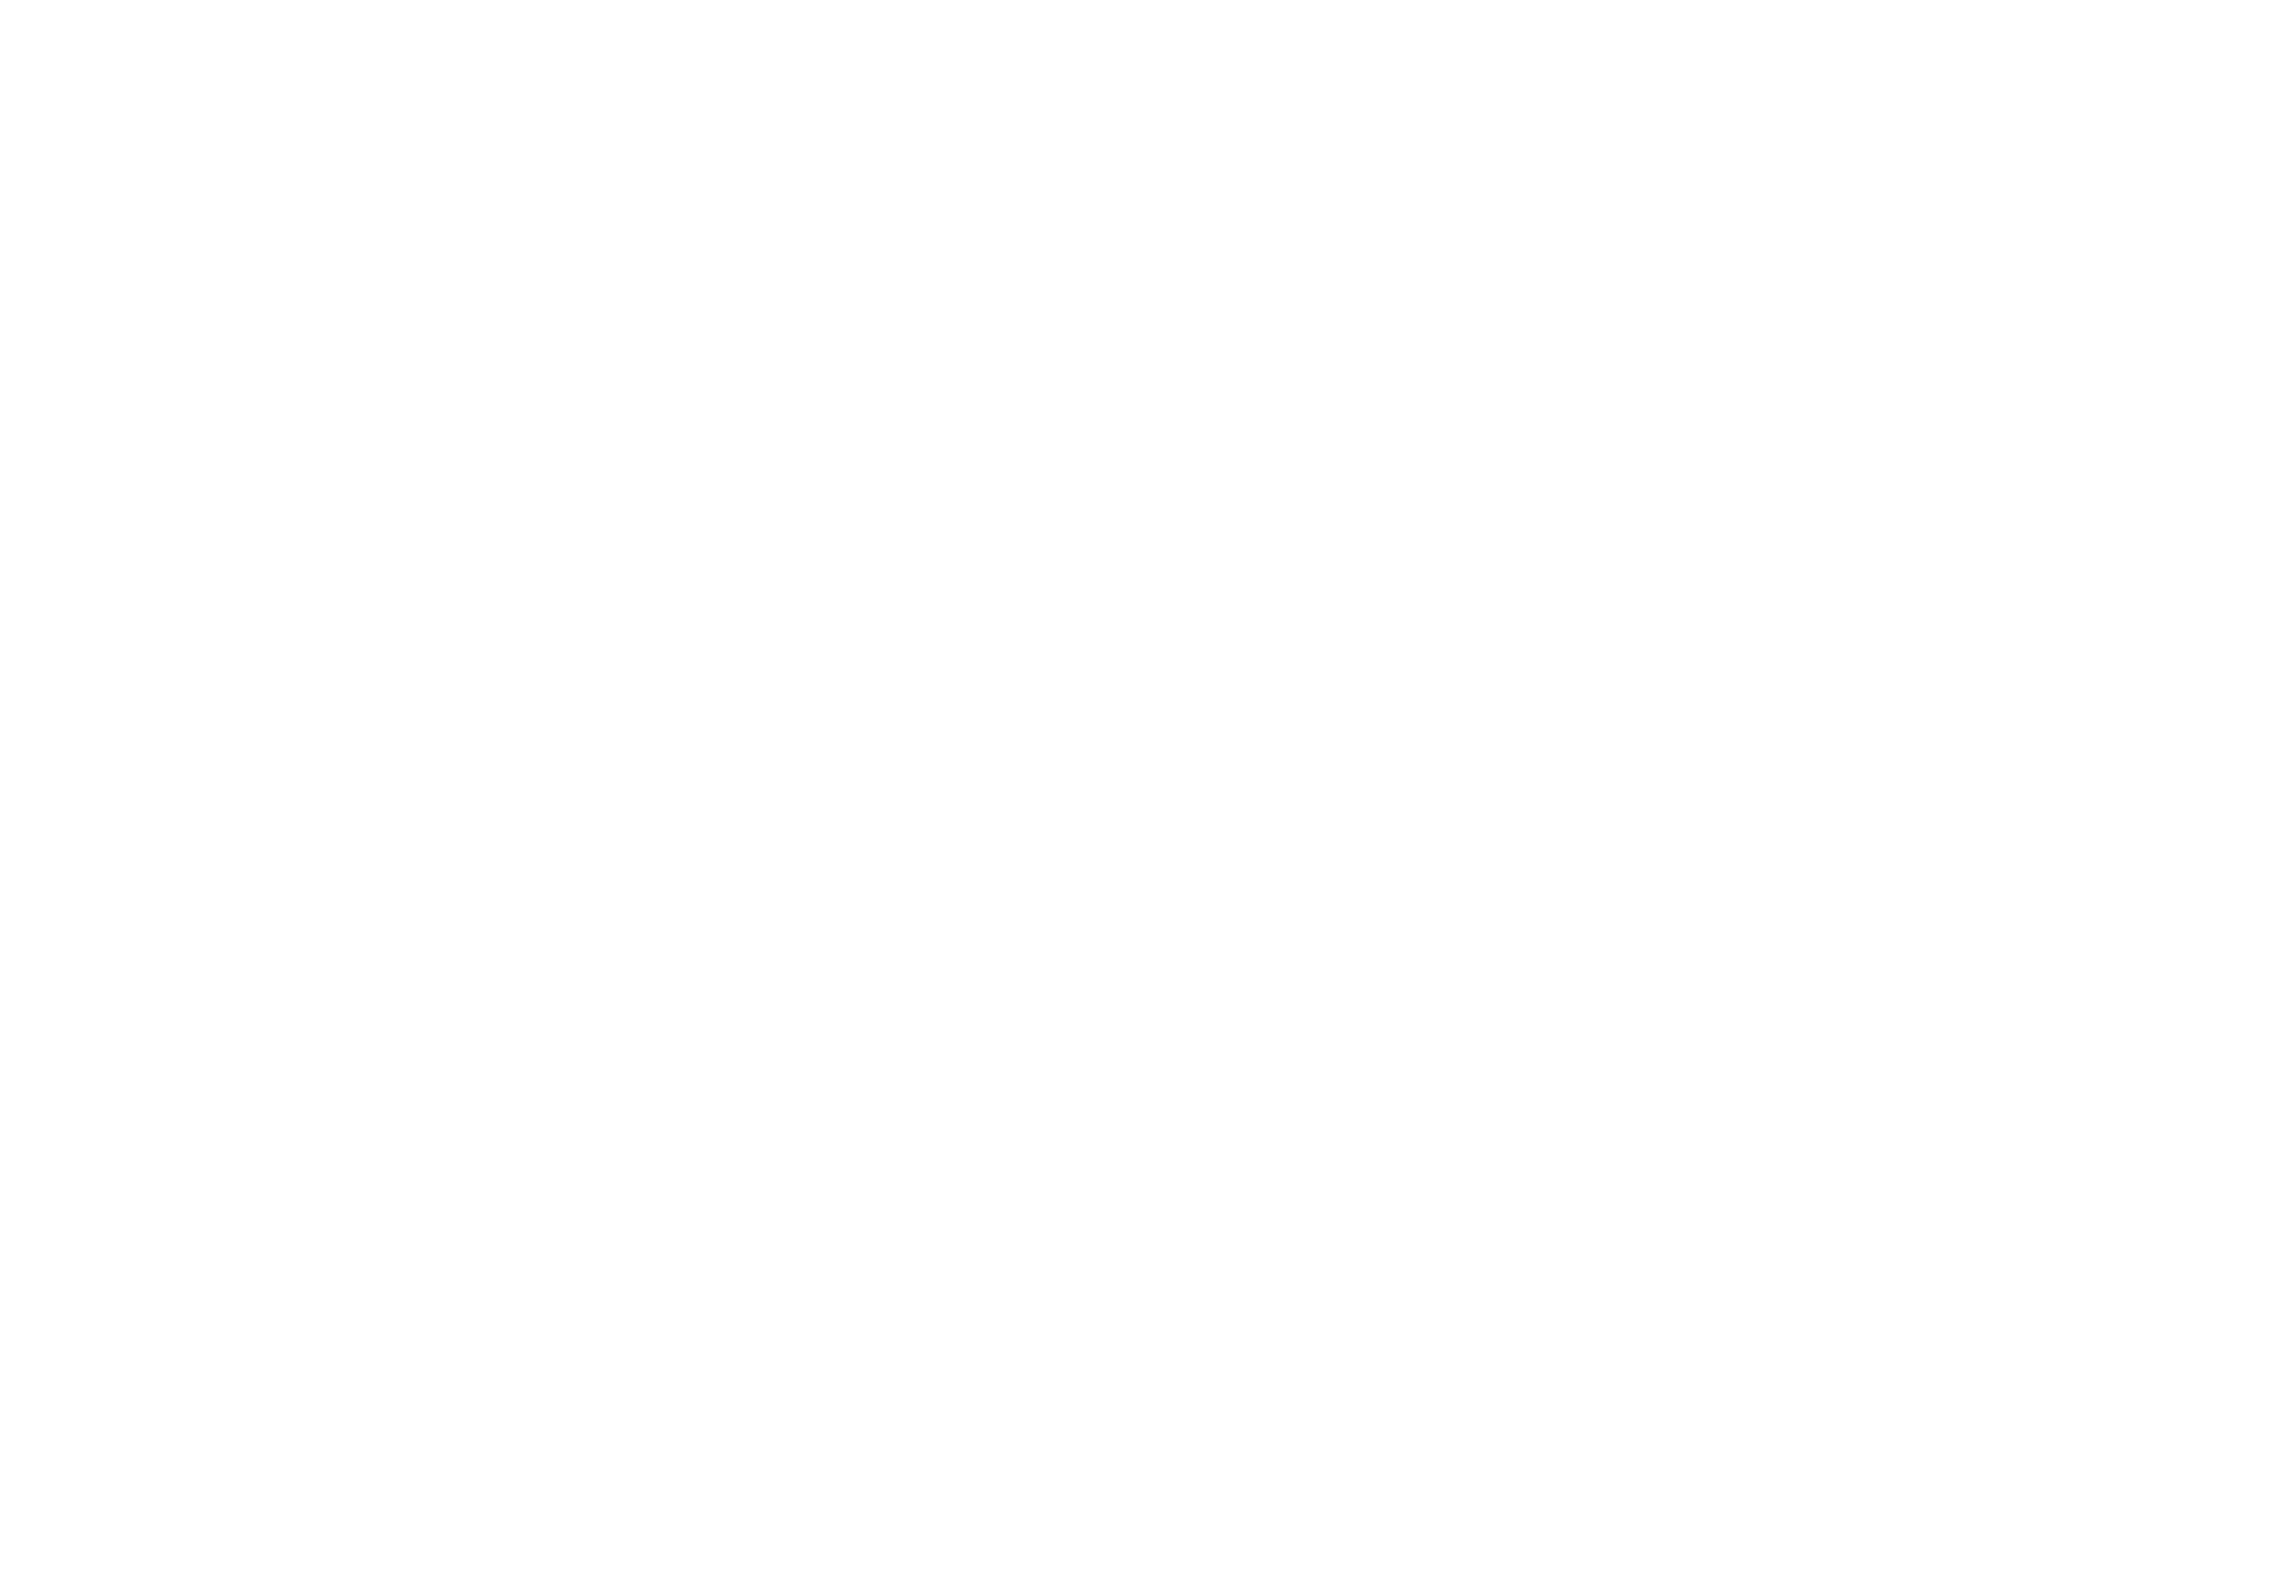 LEAN – ARMY